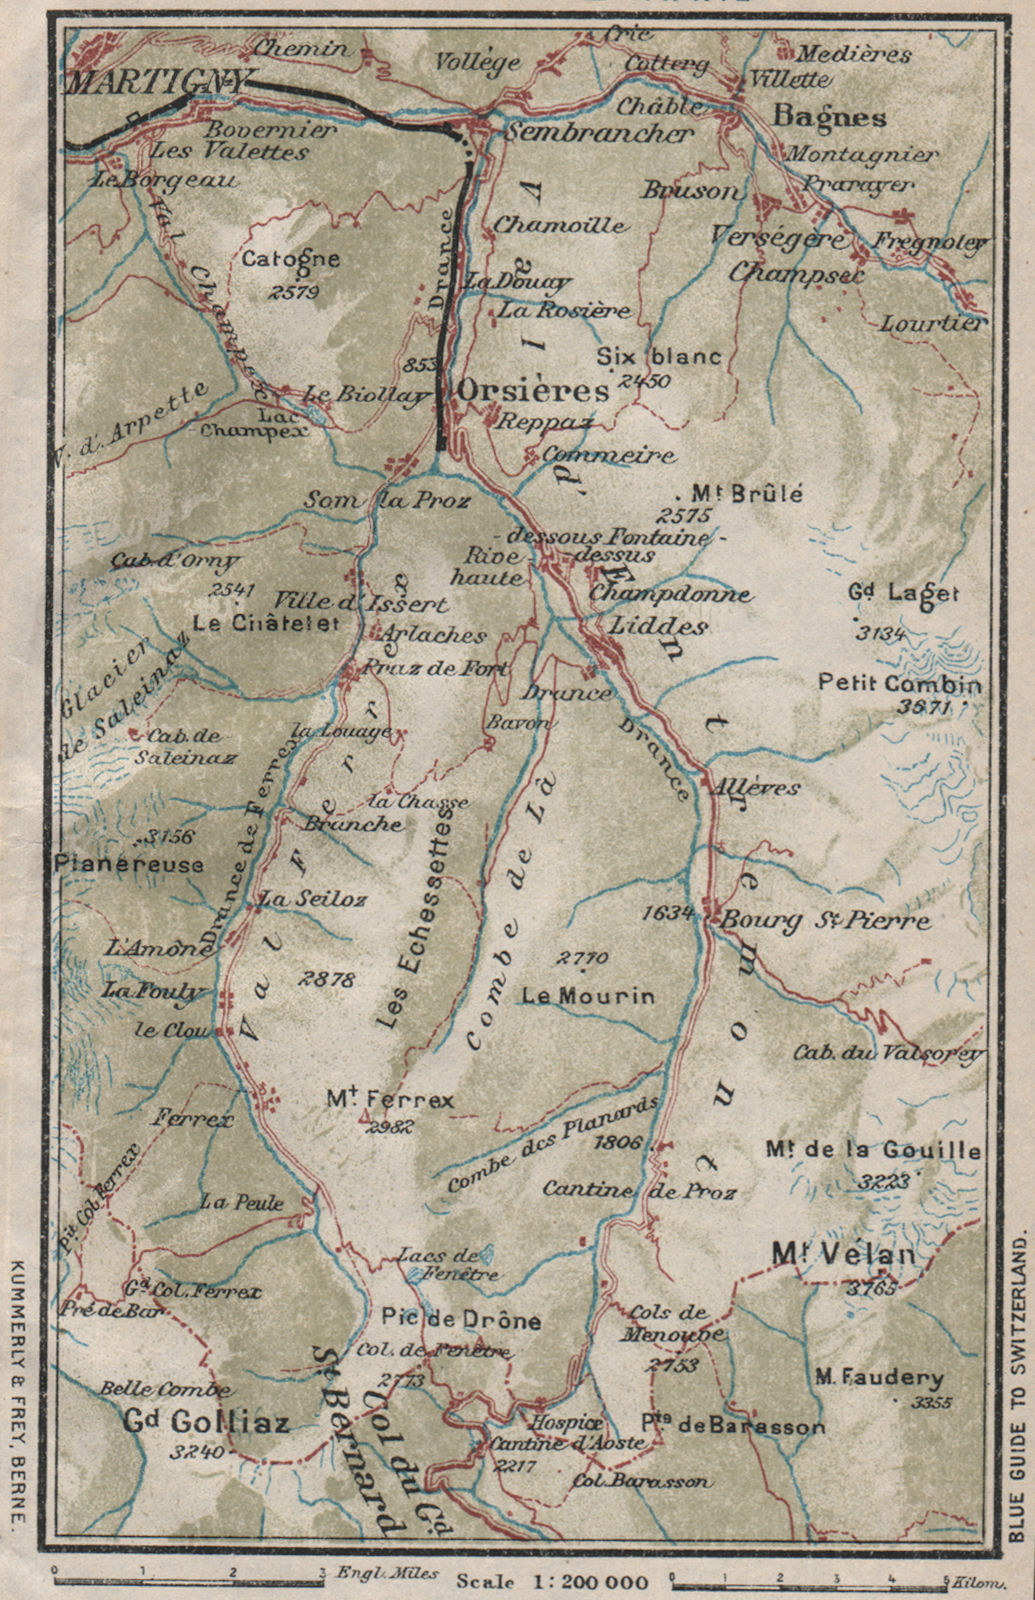 GRAND ST BERNARD.Fouly Martigny Liddes Bruson Le Chable Bourg-St-Pierre 1930 map